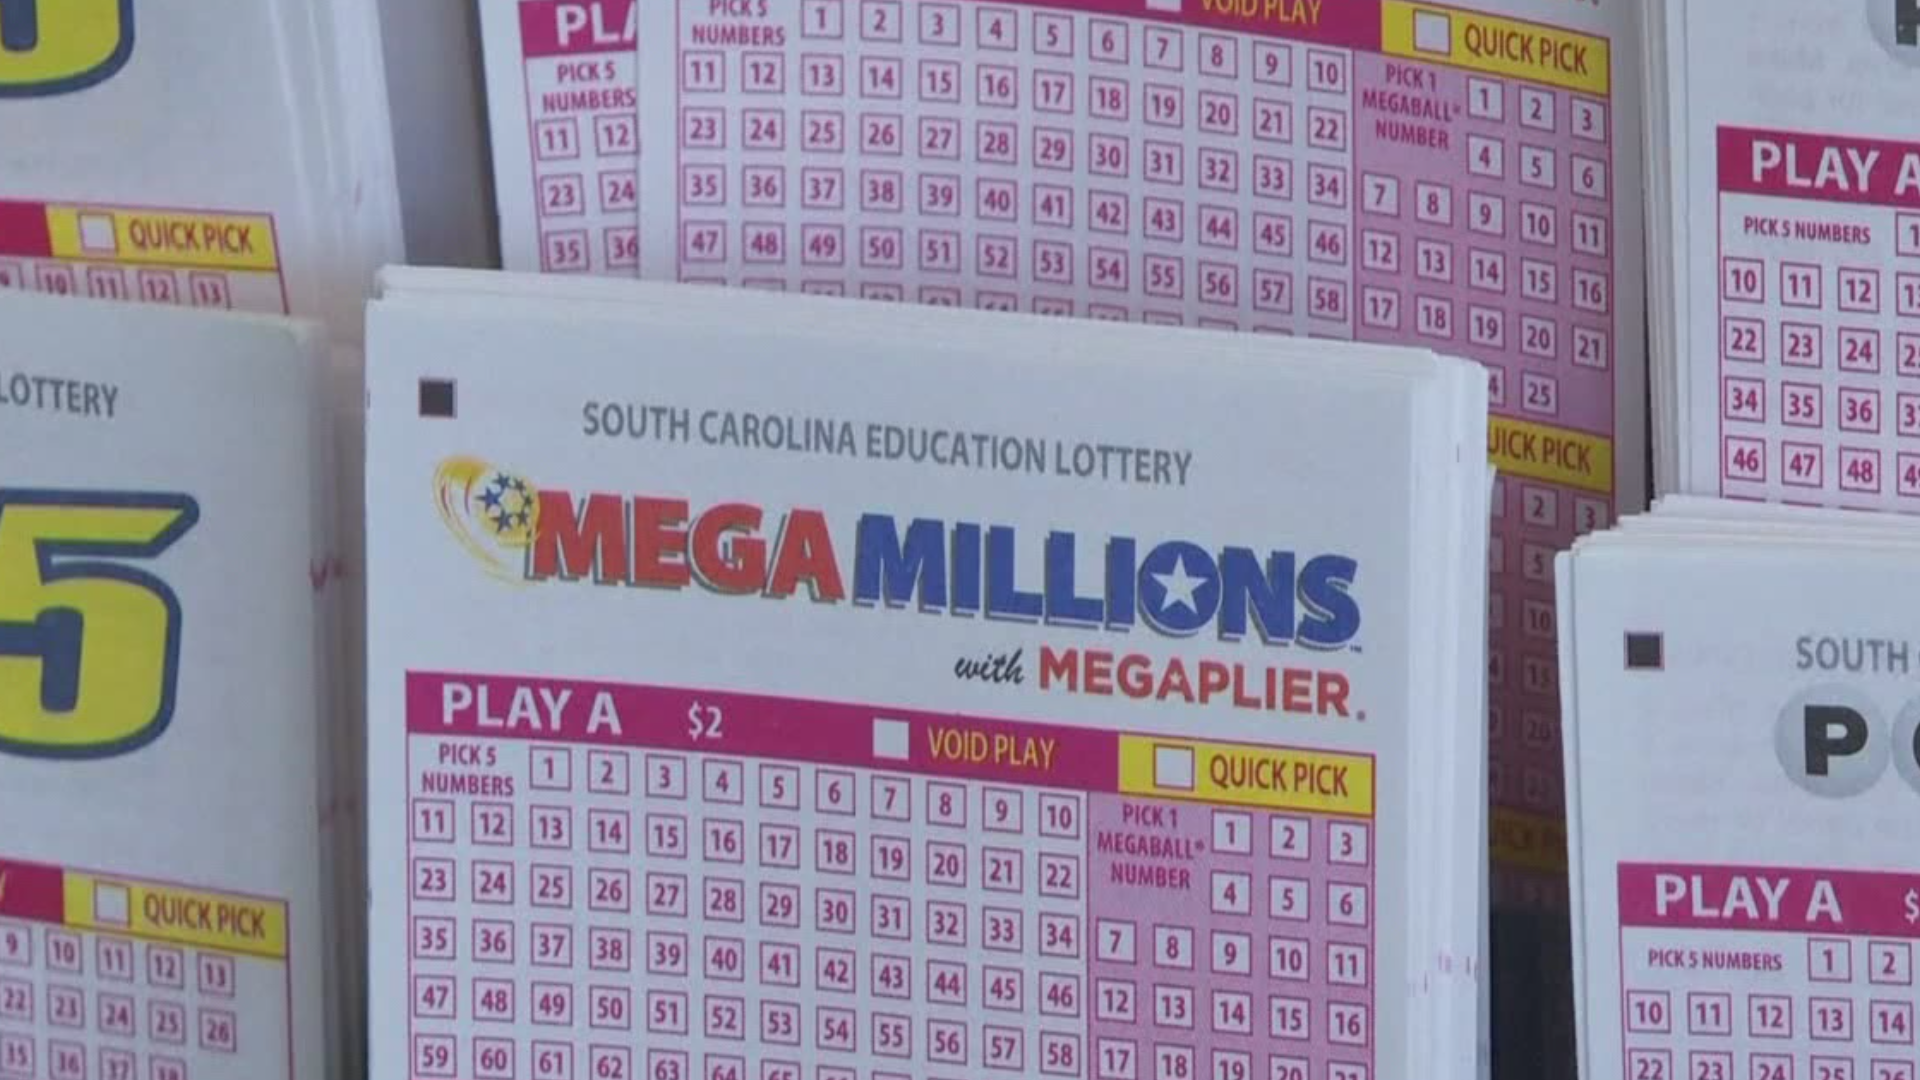 Tuesday's Mega Millions jackpot is up to $850 million